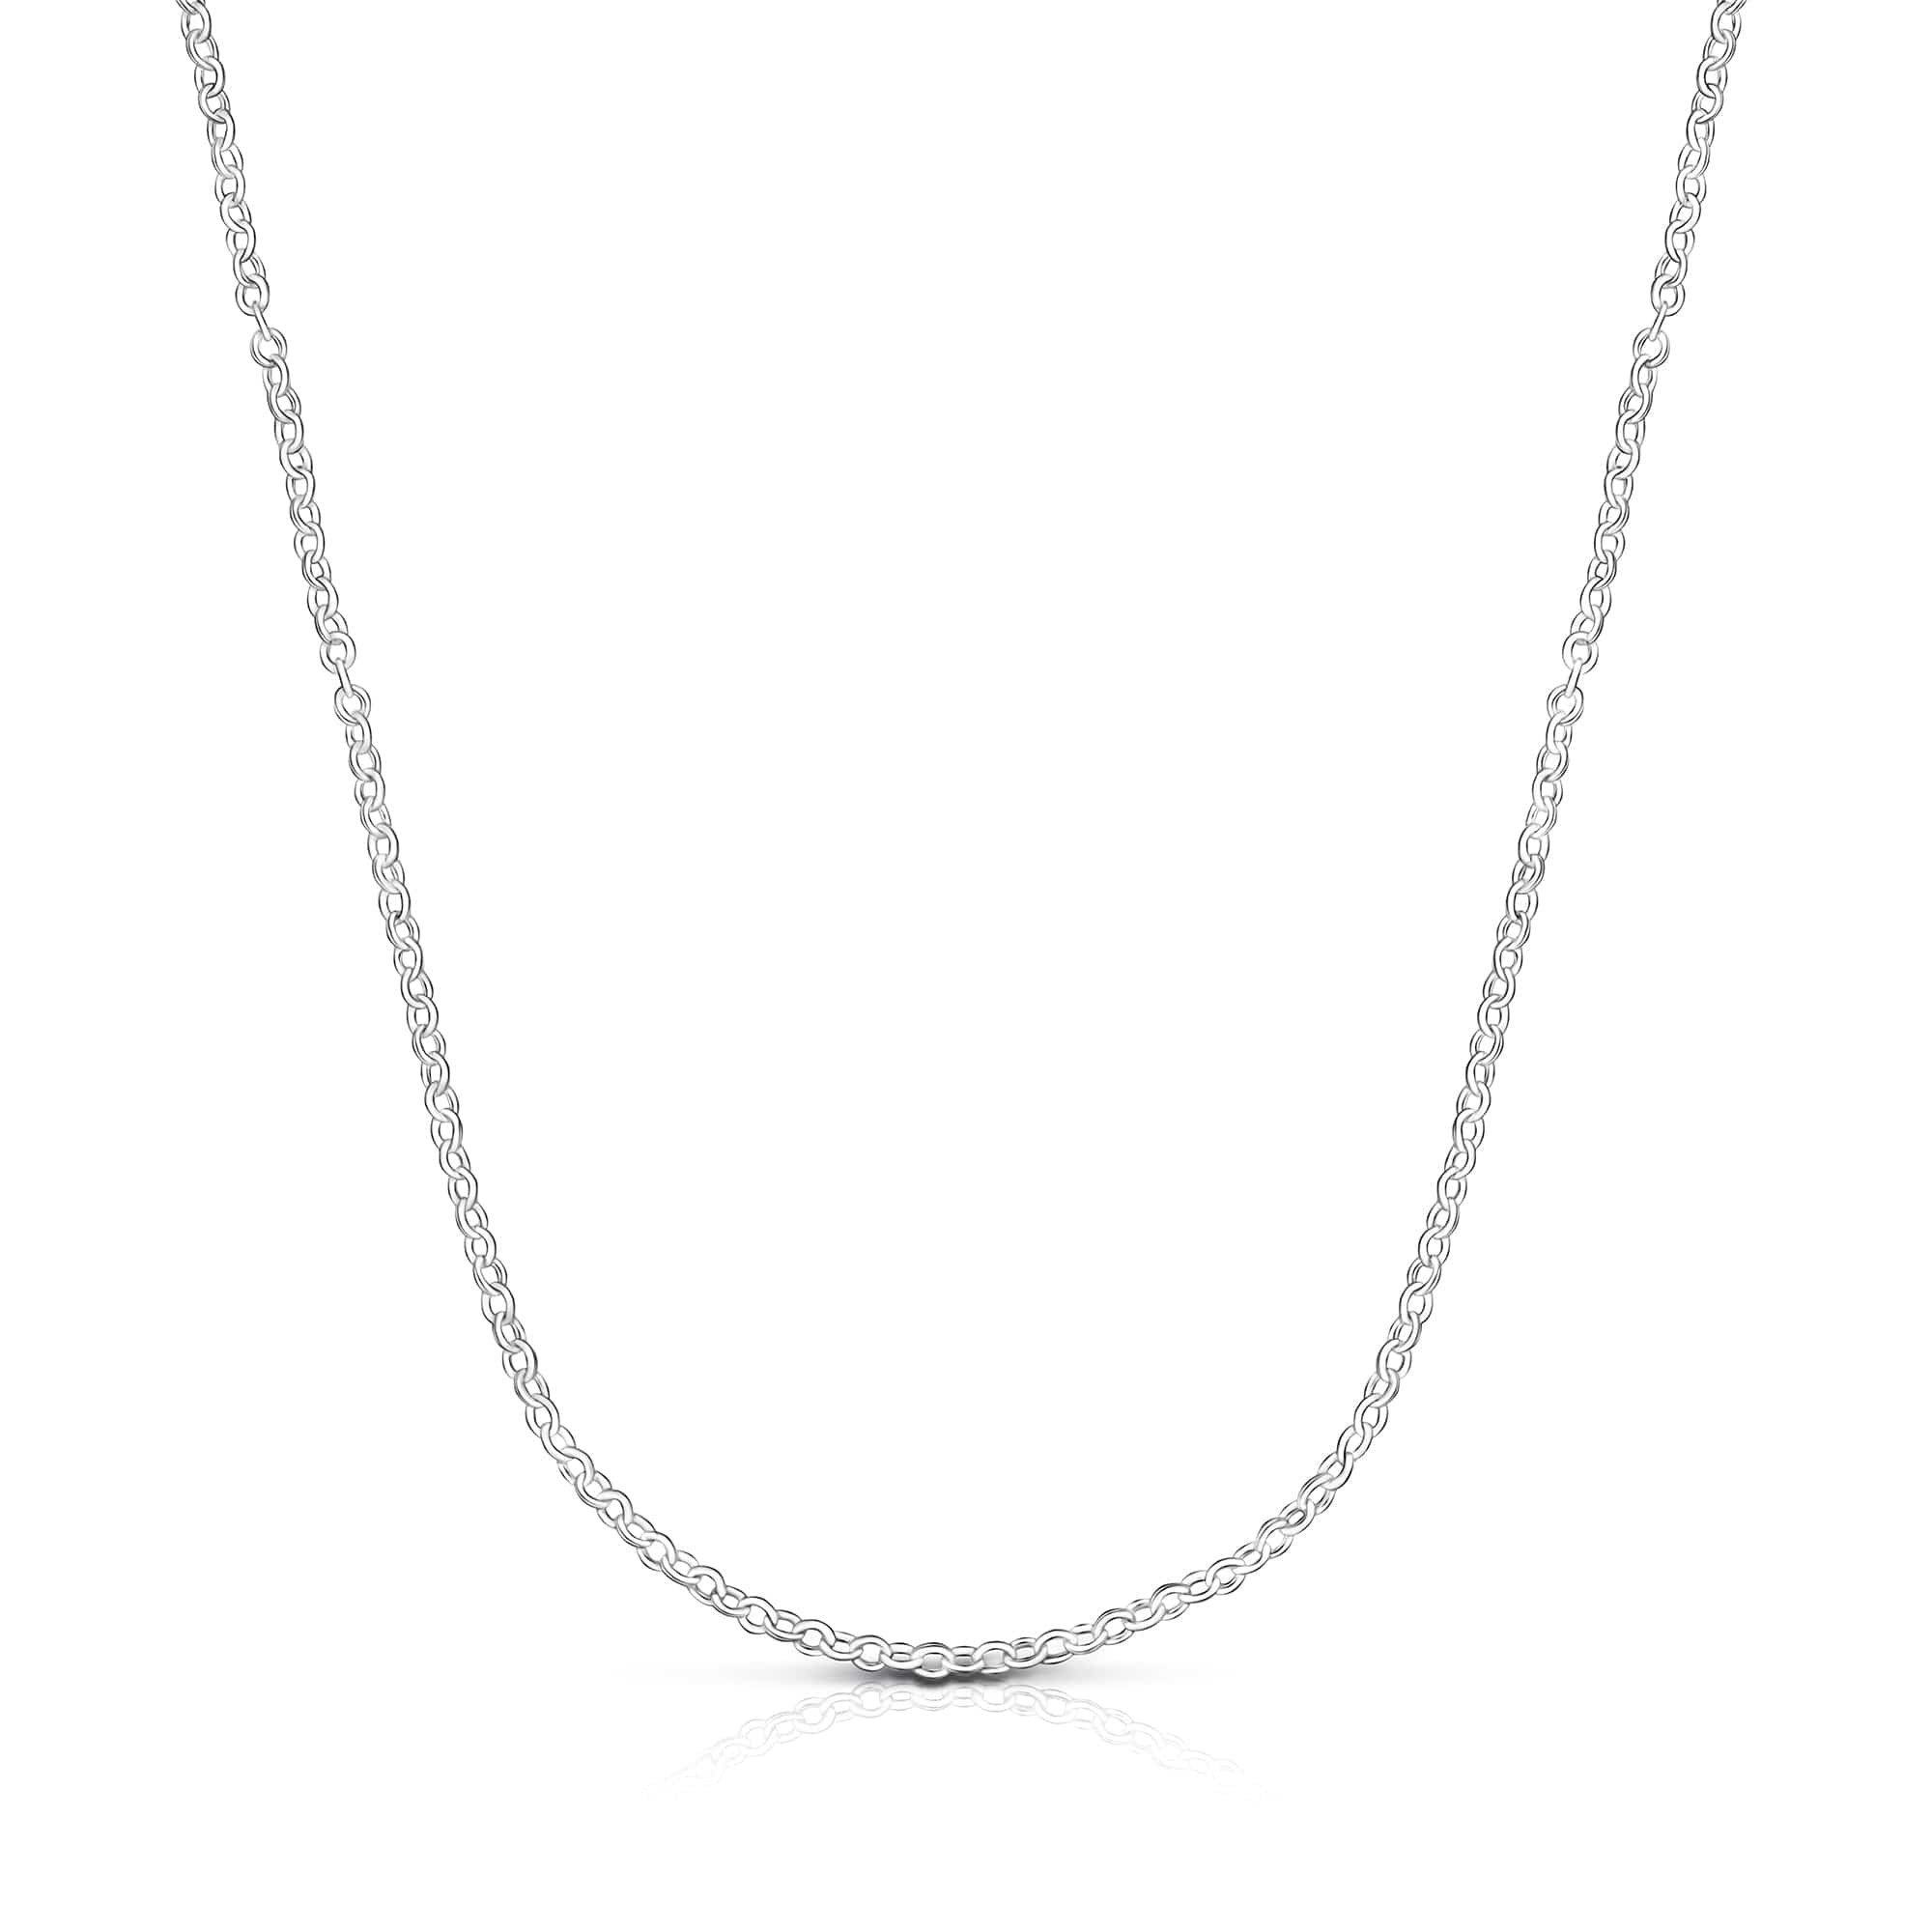 Adjustable Sterling Silver Necklace Chain for Men High Polished